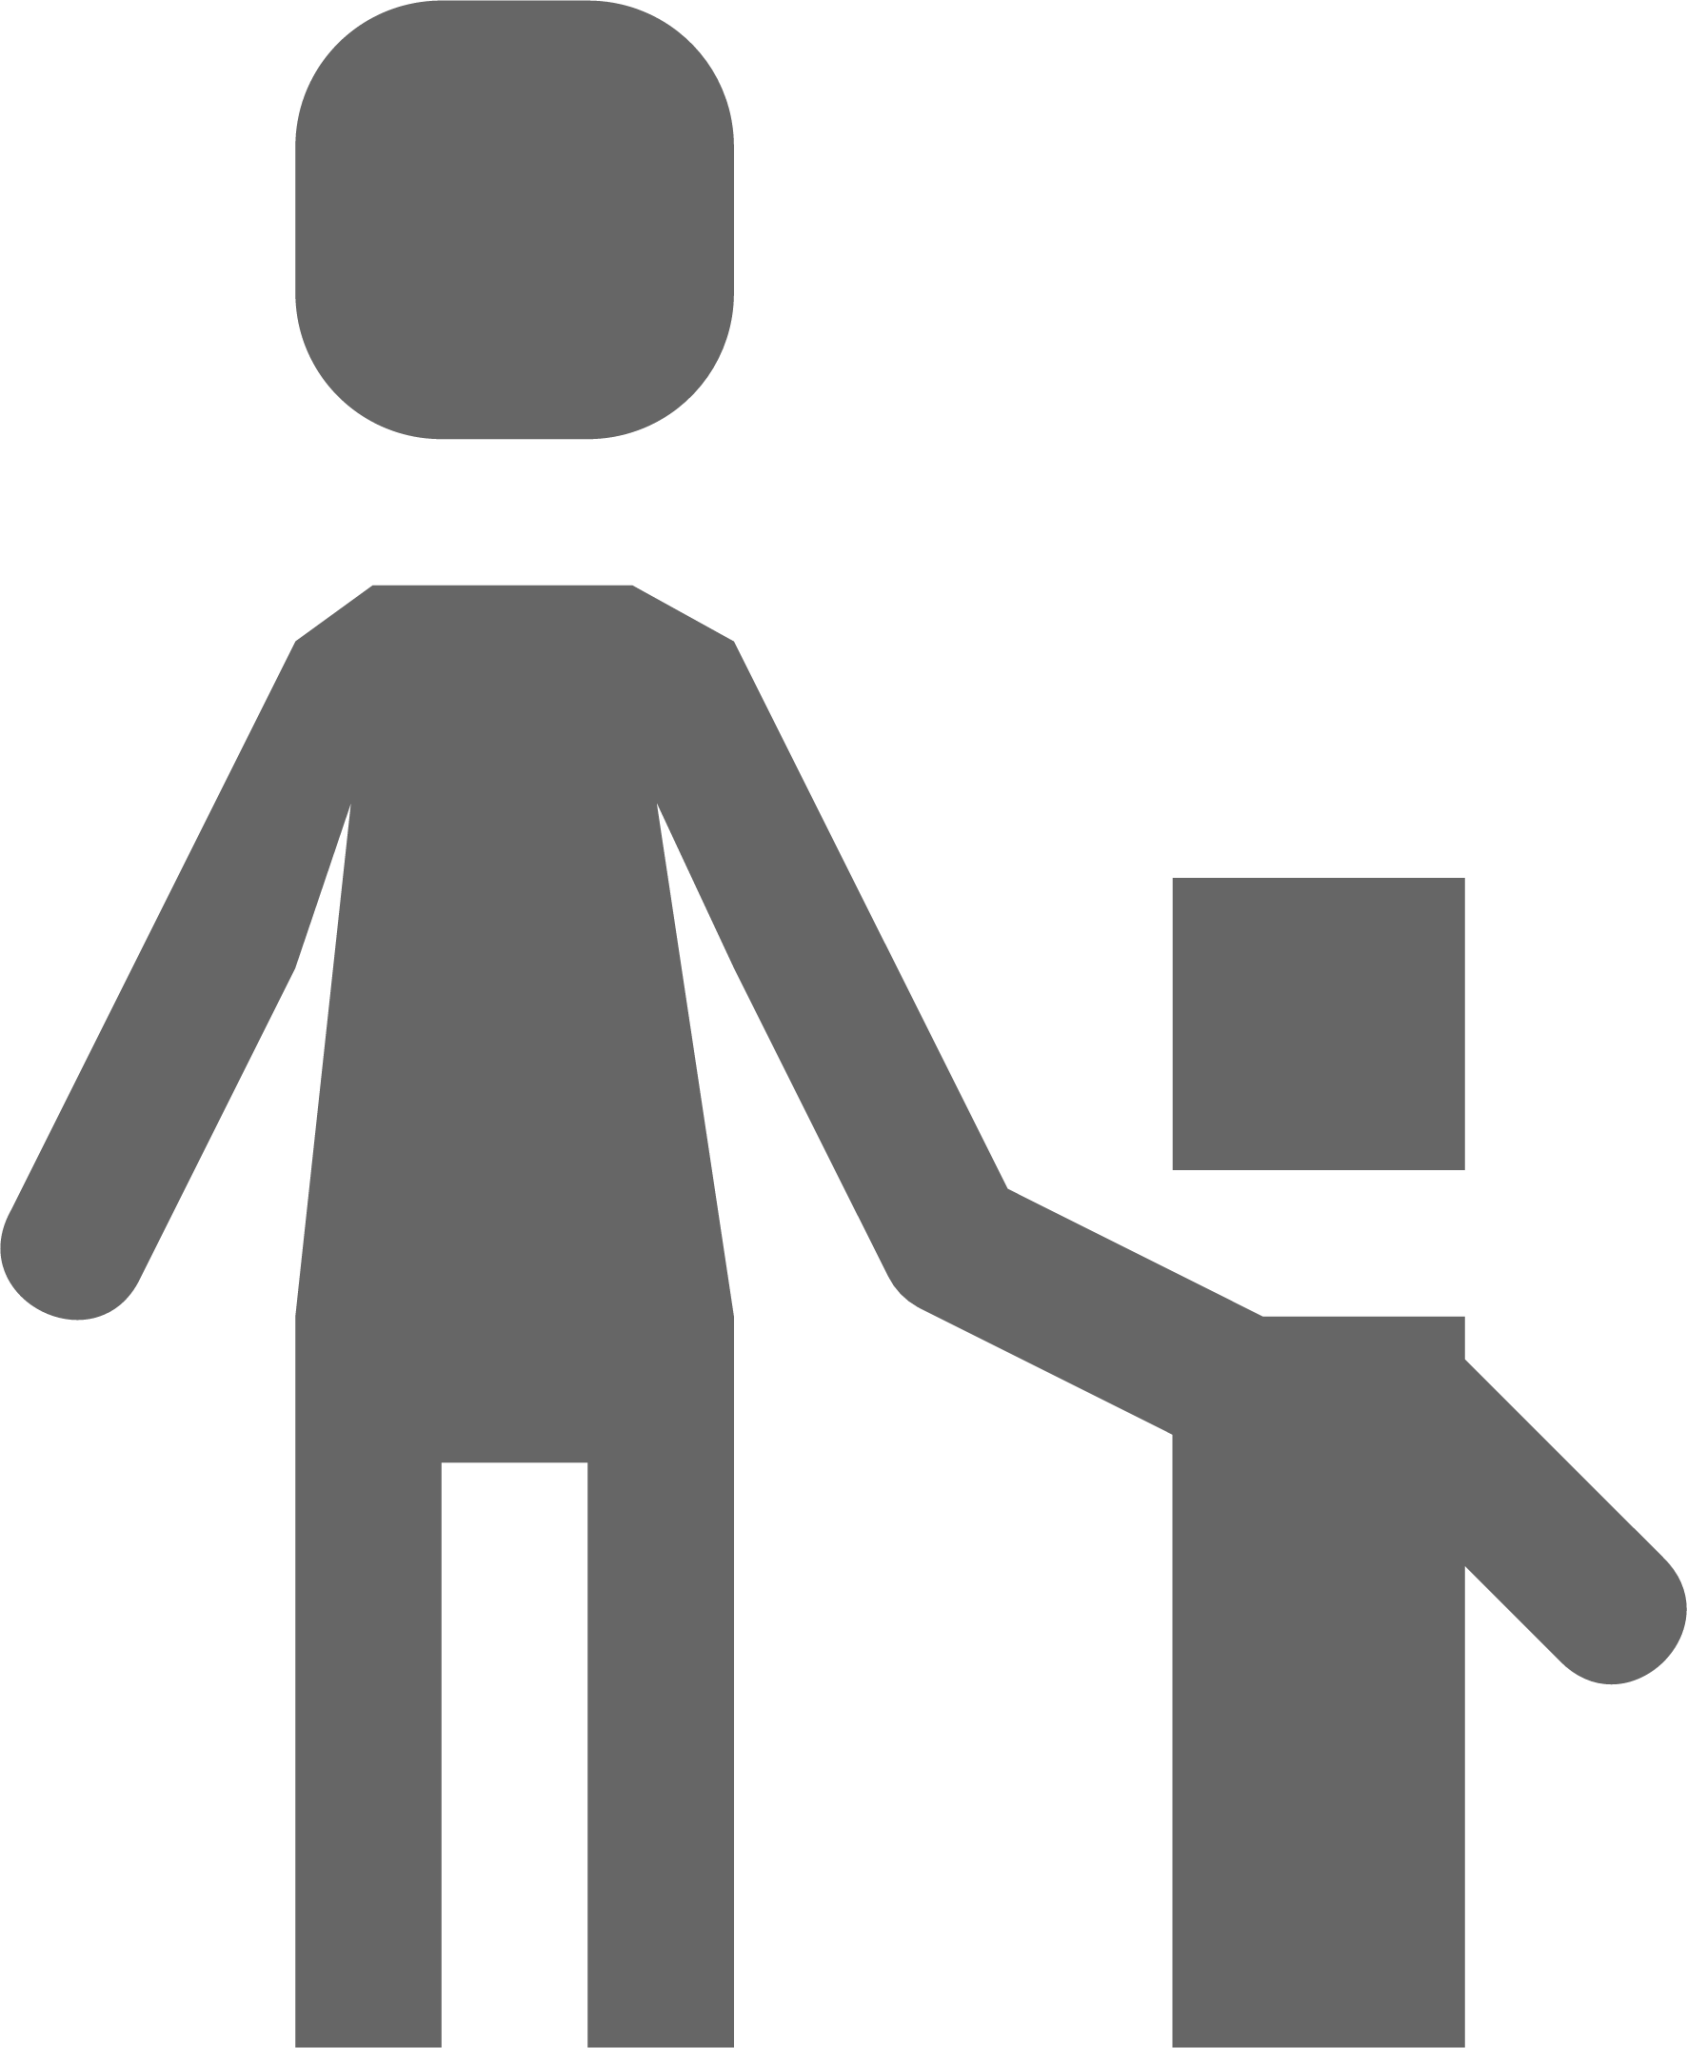 preferences system parental control symbolic icon